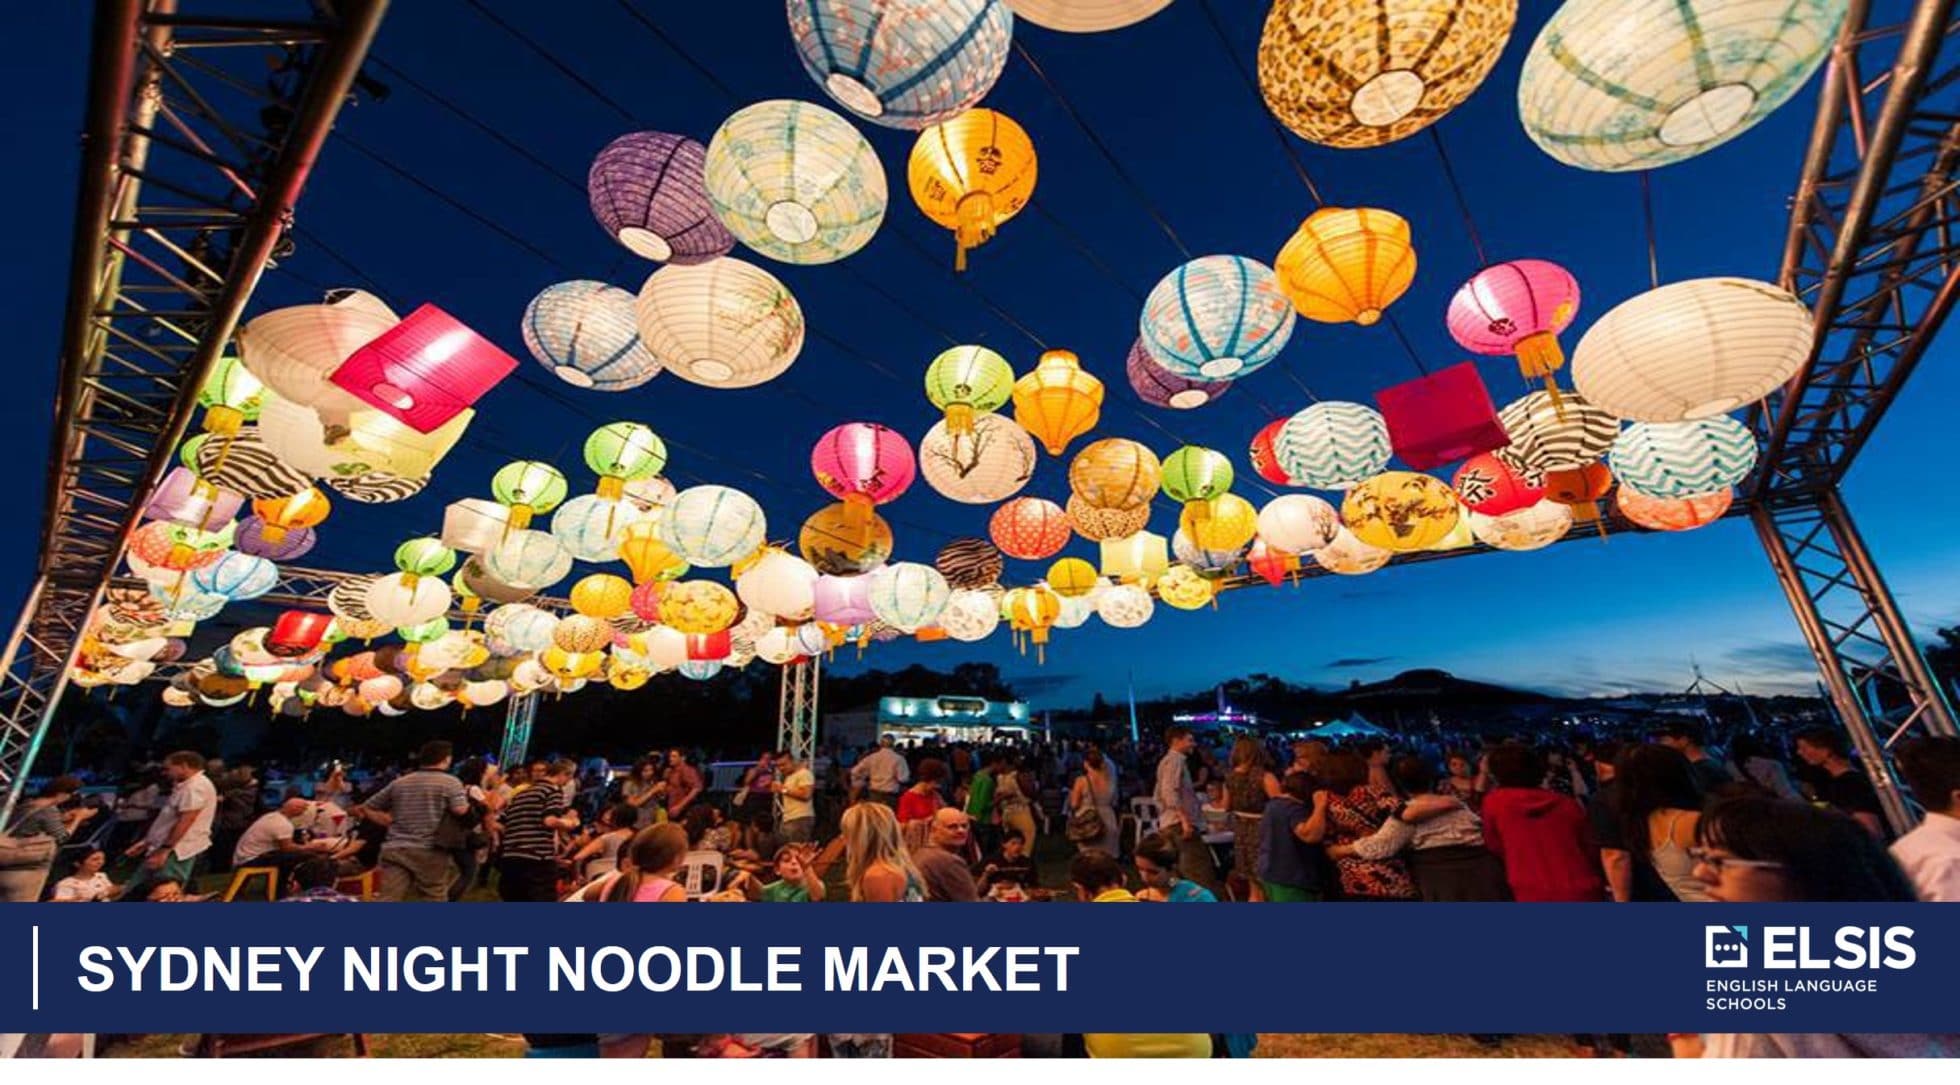 Sydney night noodle market